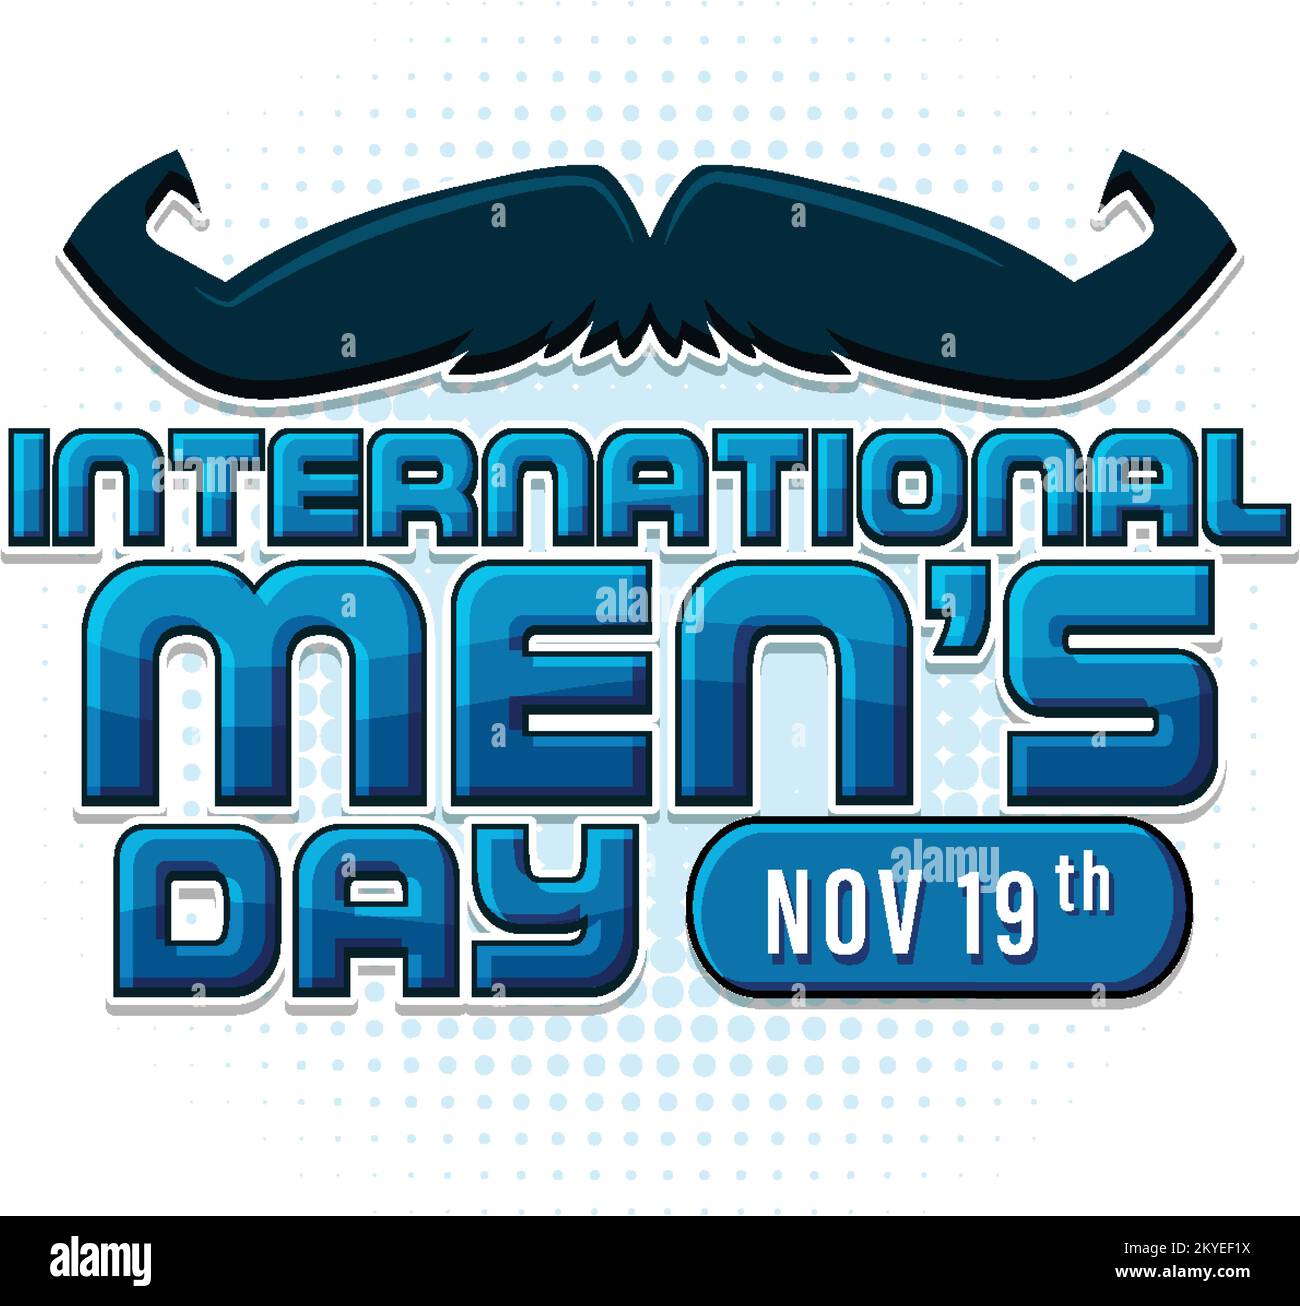 International Mens Day Poster Design illustration Stock Vector